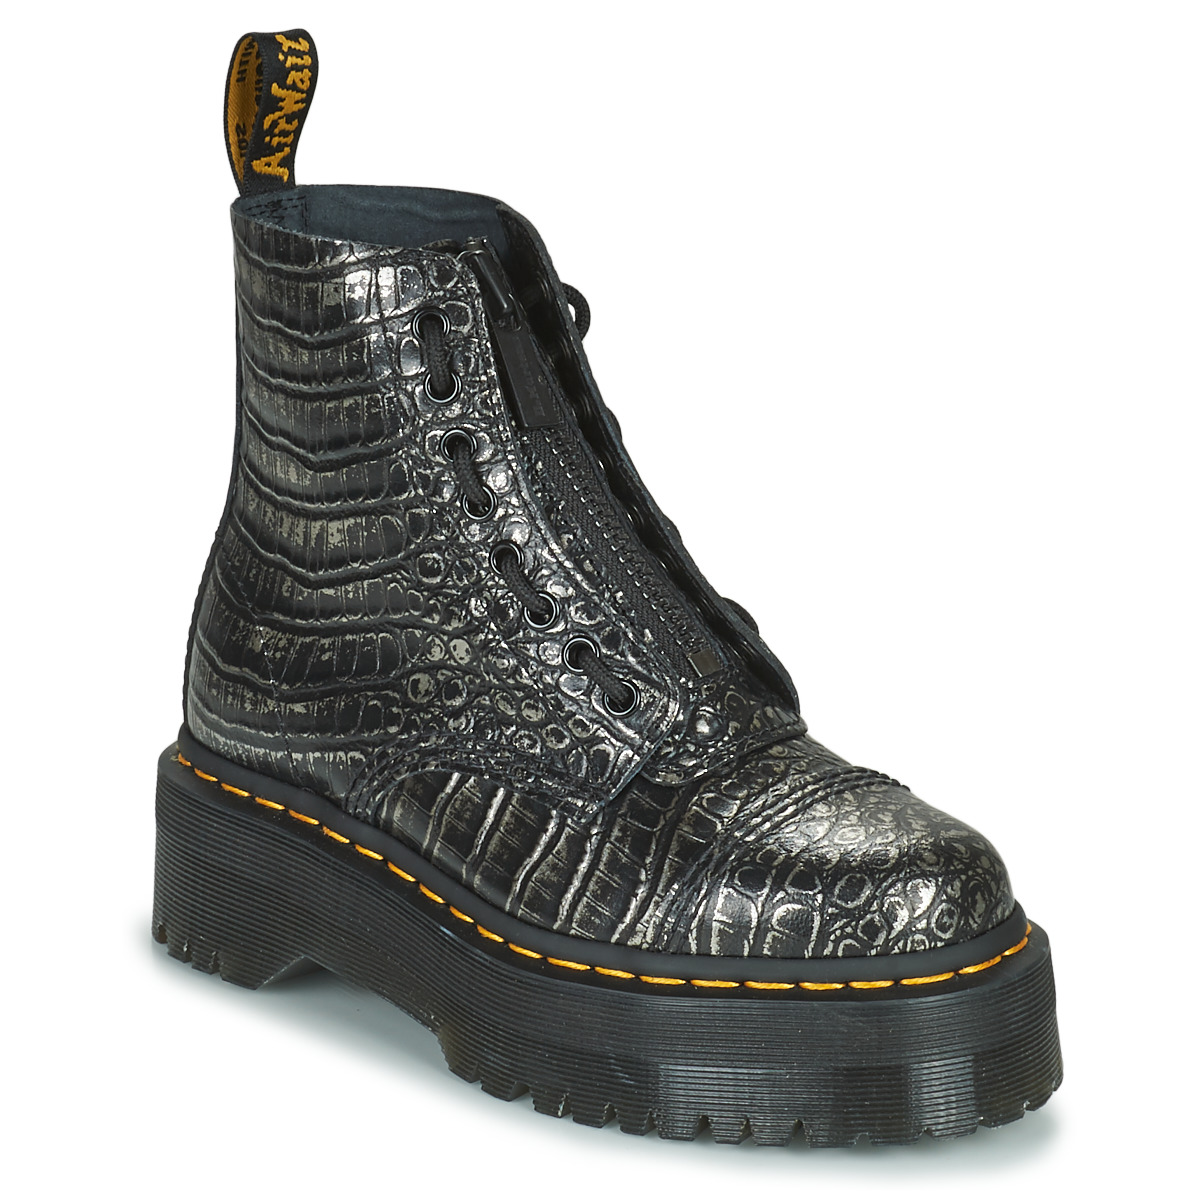 Sapatos Mulher Martens Vintage 1460 leather ankle boots Sinclair Gunmetal Wild Croc Emboss Preto